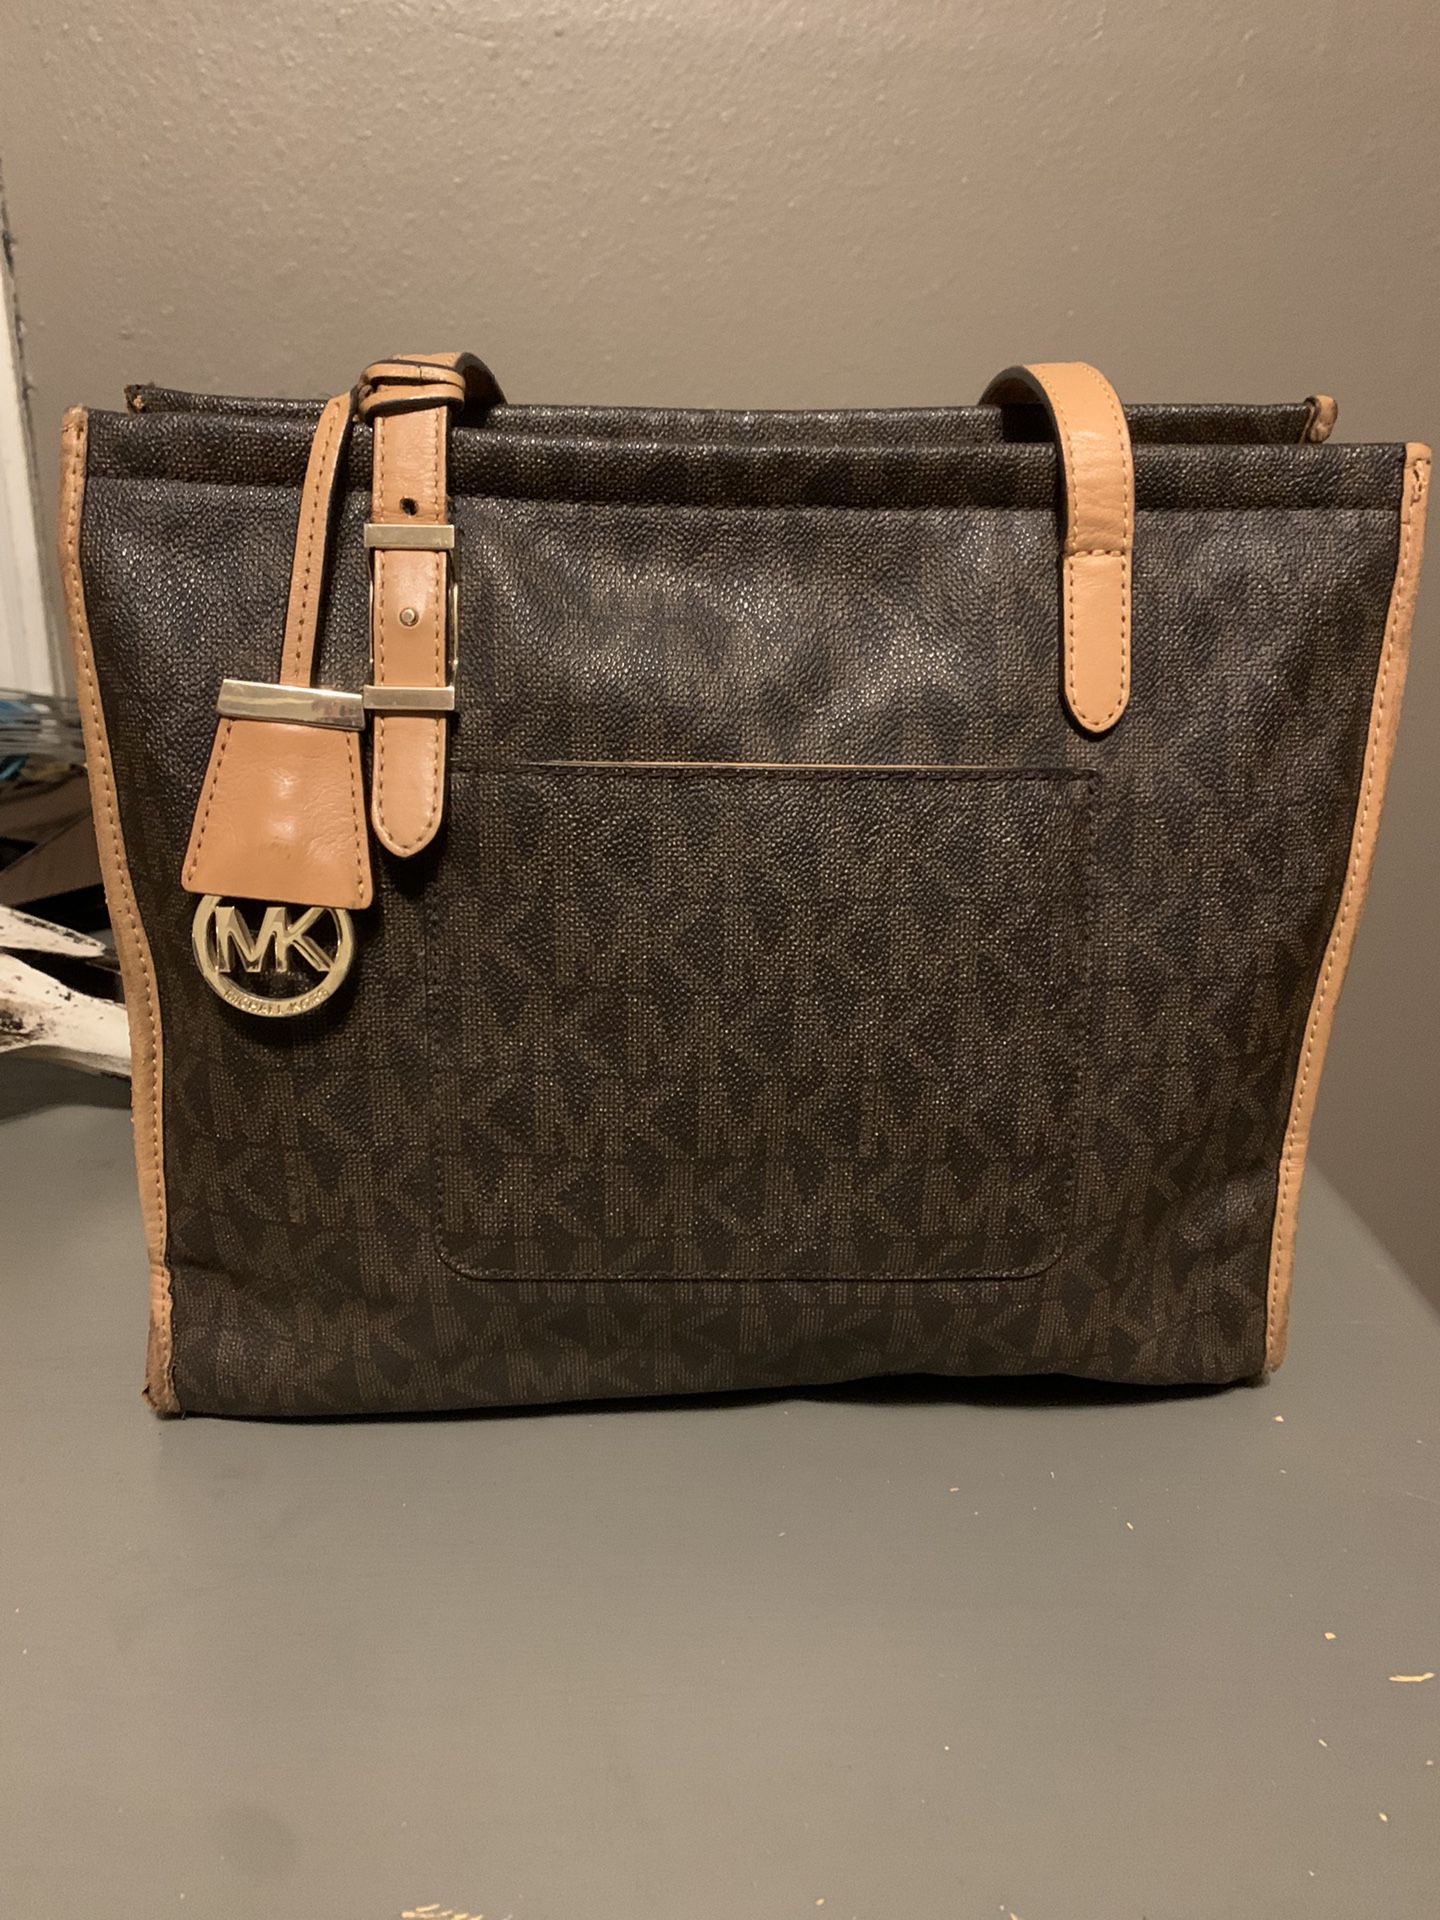 Michael Kors brown satchel purse